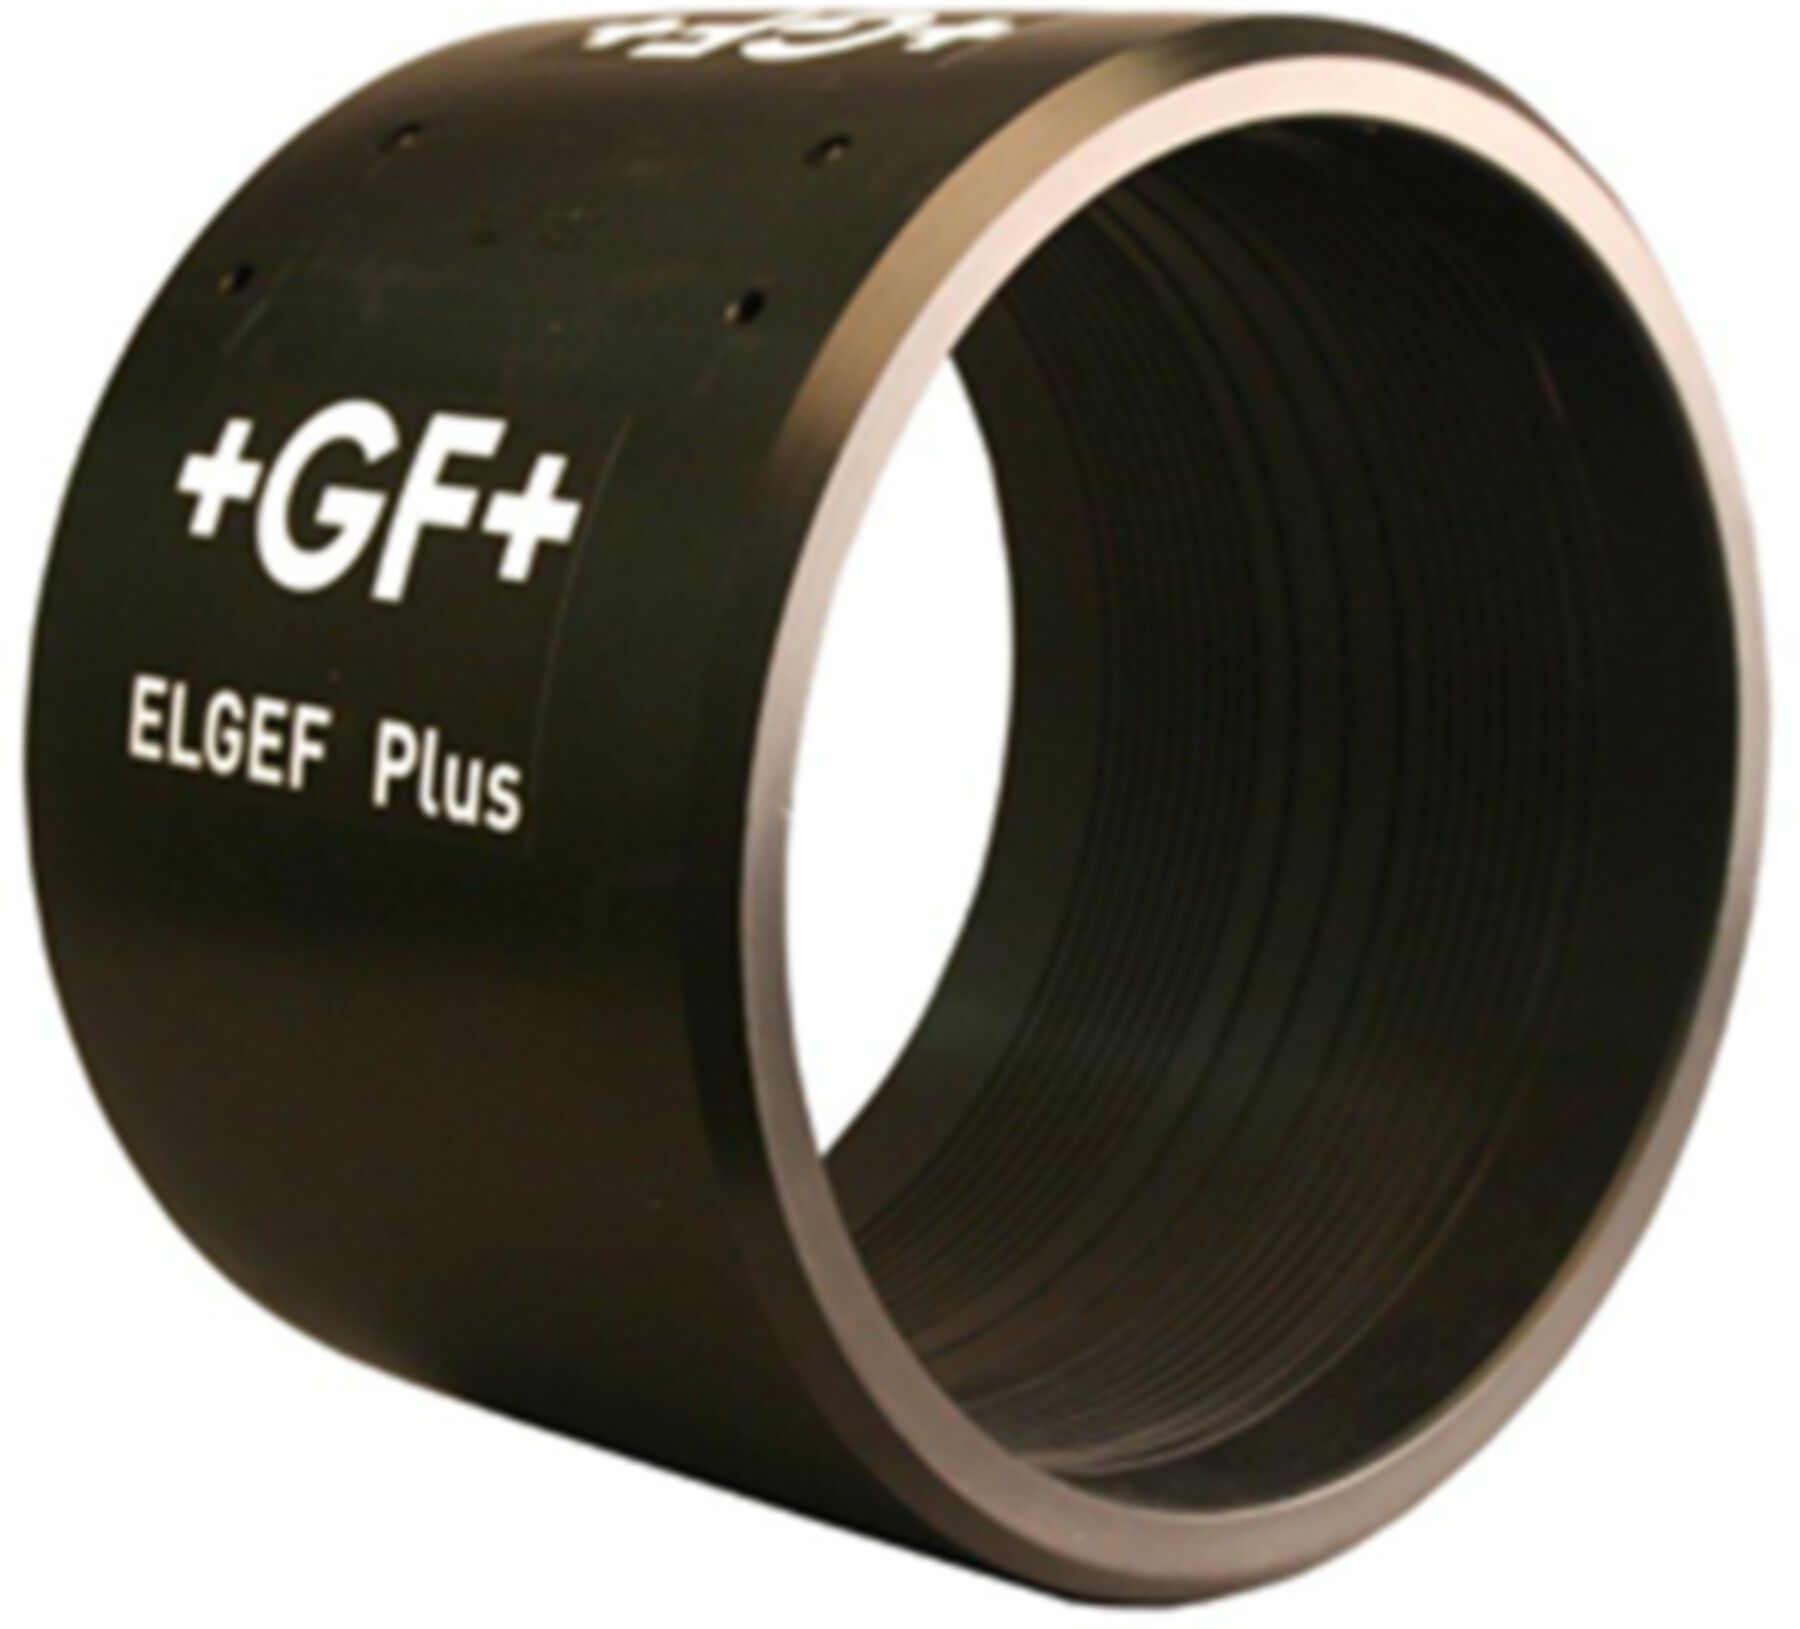 ELGEF Muffe PN 16 d 140mm 753 911 616 - ELGEF Plus Elektroschweissfittinge